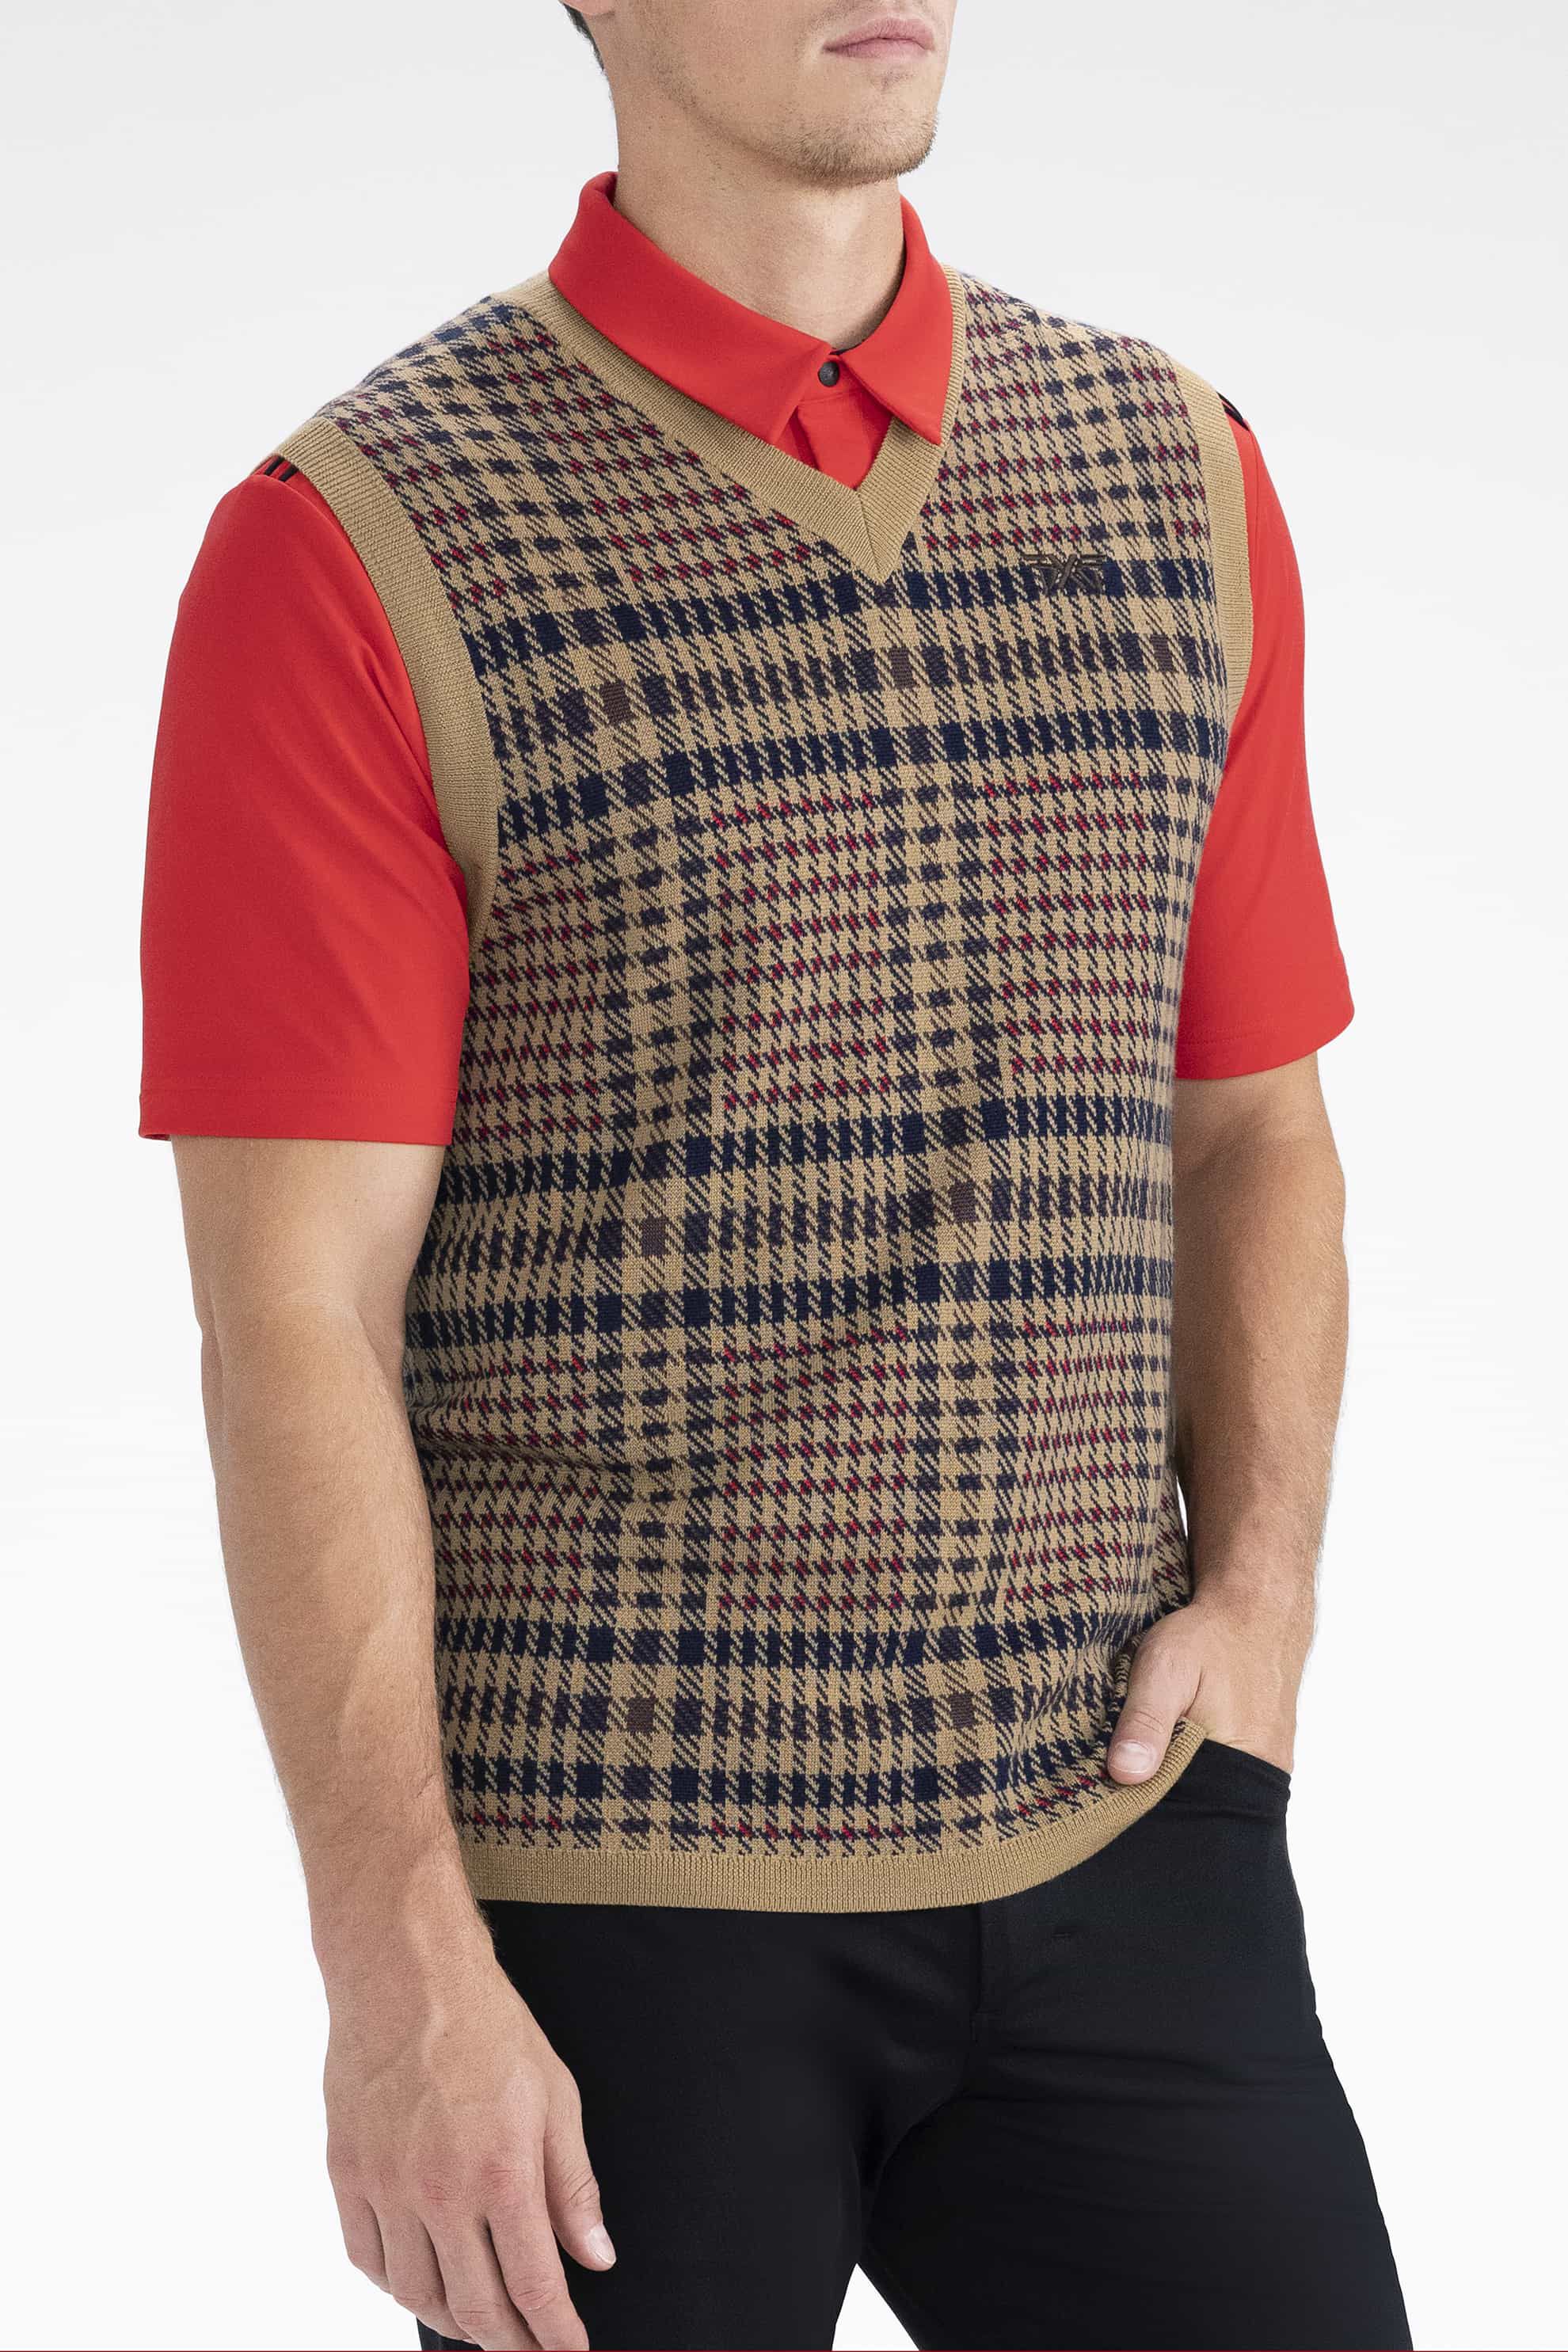 Bershka chunky knit sweater vest in chocolate brown  ASOS